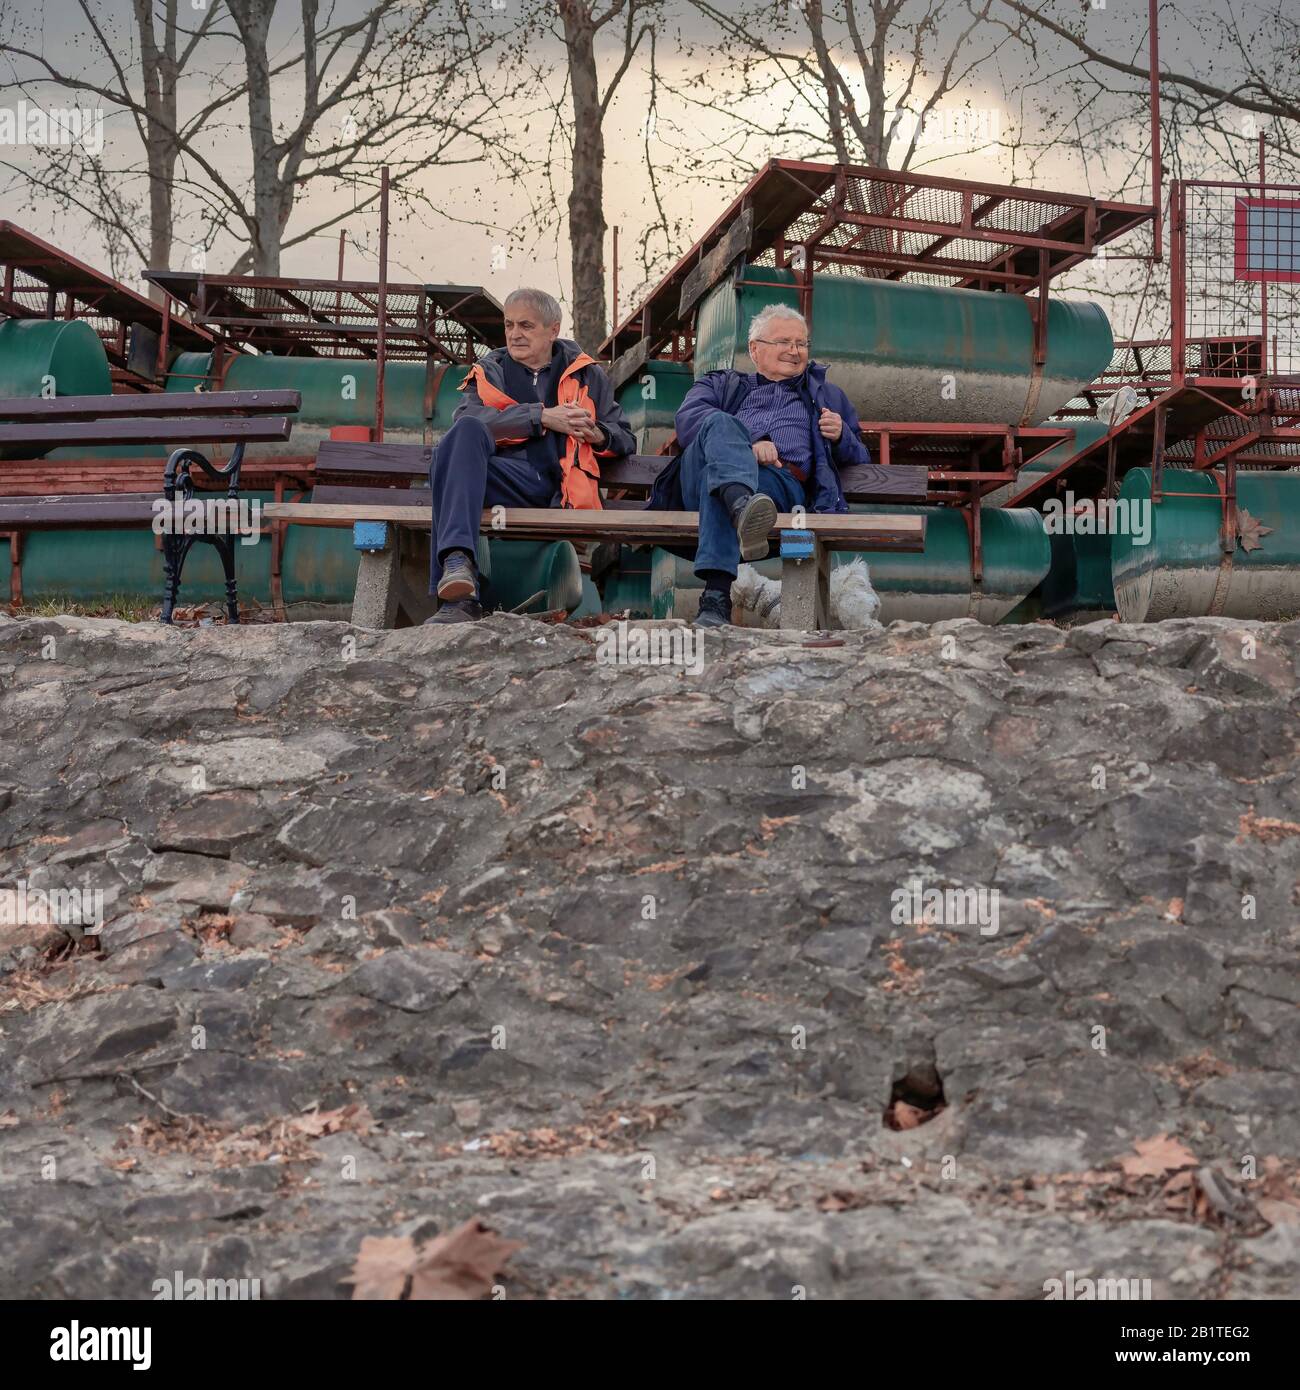 Serbia, Feb 25, 2020: Old friends sitting on a bench at Danube River embankment in Sremski Karlovci Stock Photo